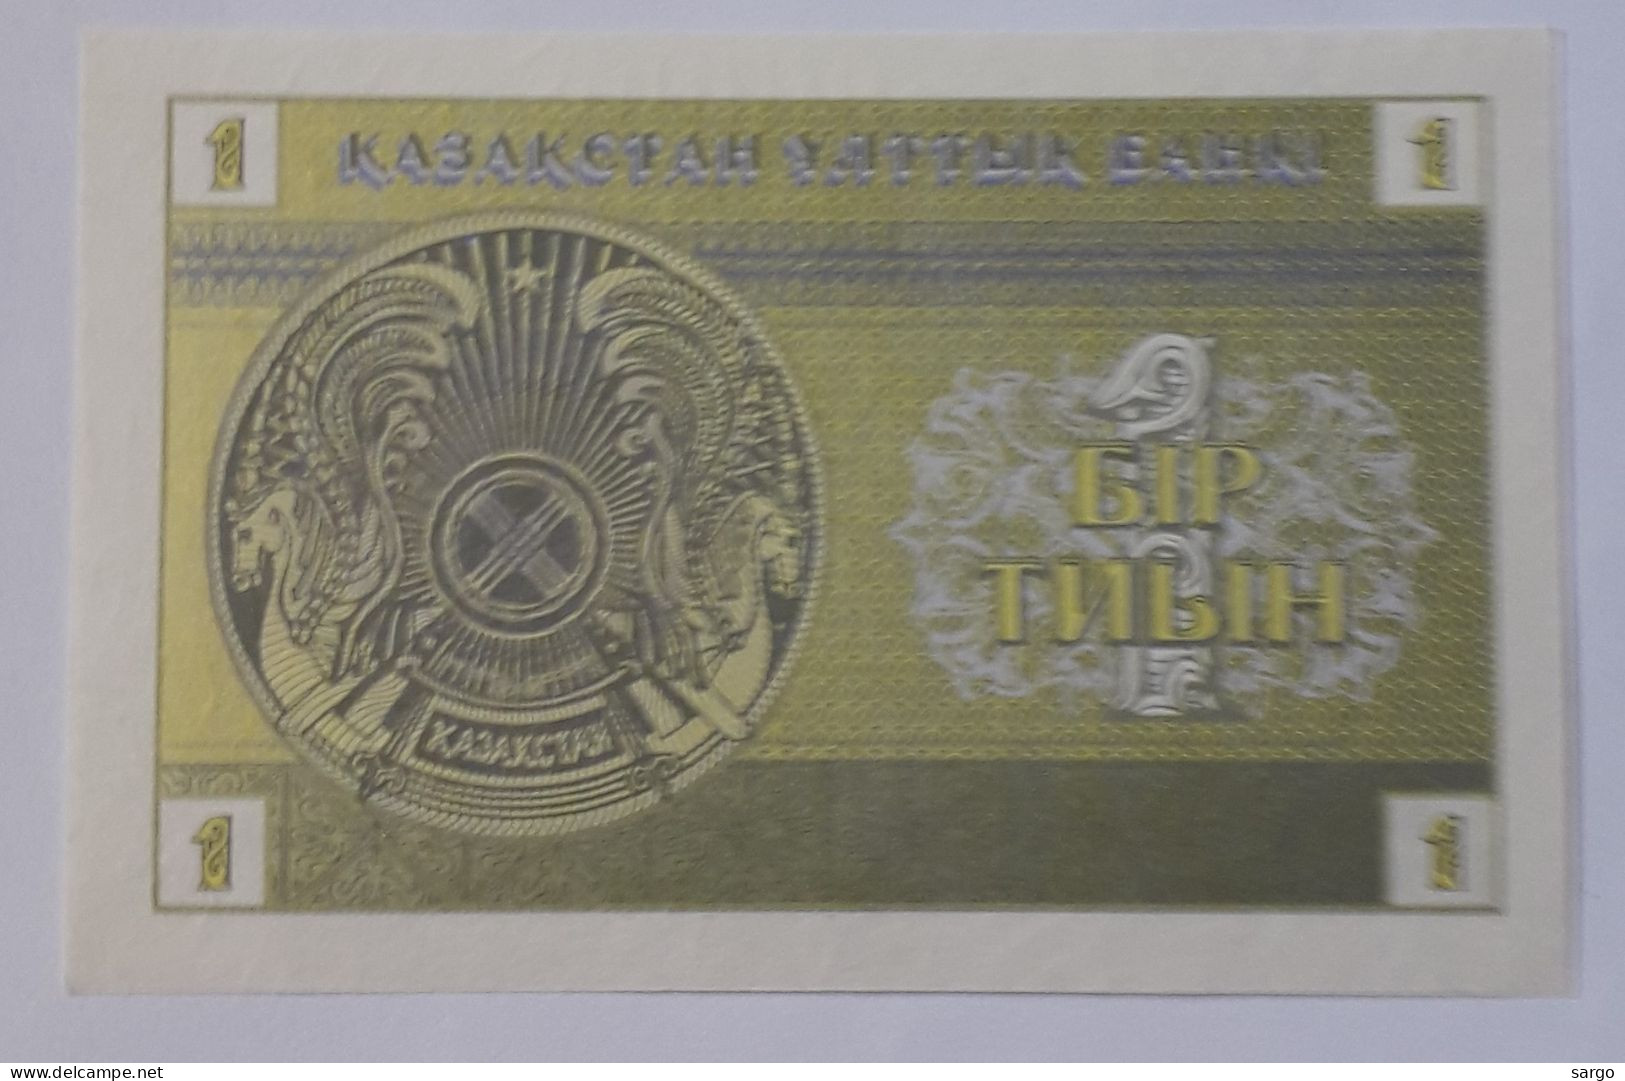 KAZAKHSTAN - 1 TYIN - 1993 - P 1 - UNC - BANKNOTES - PAPER MONEY - CARTAMONETA - - Kazachstan